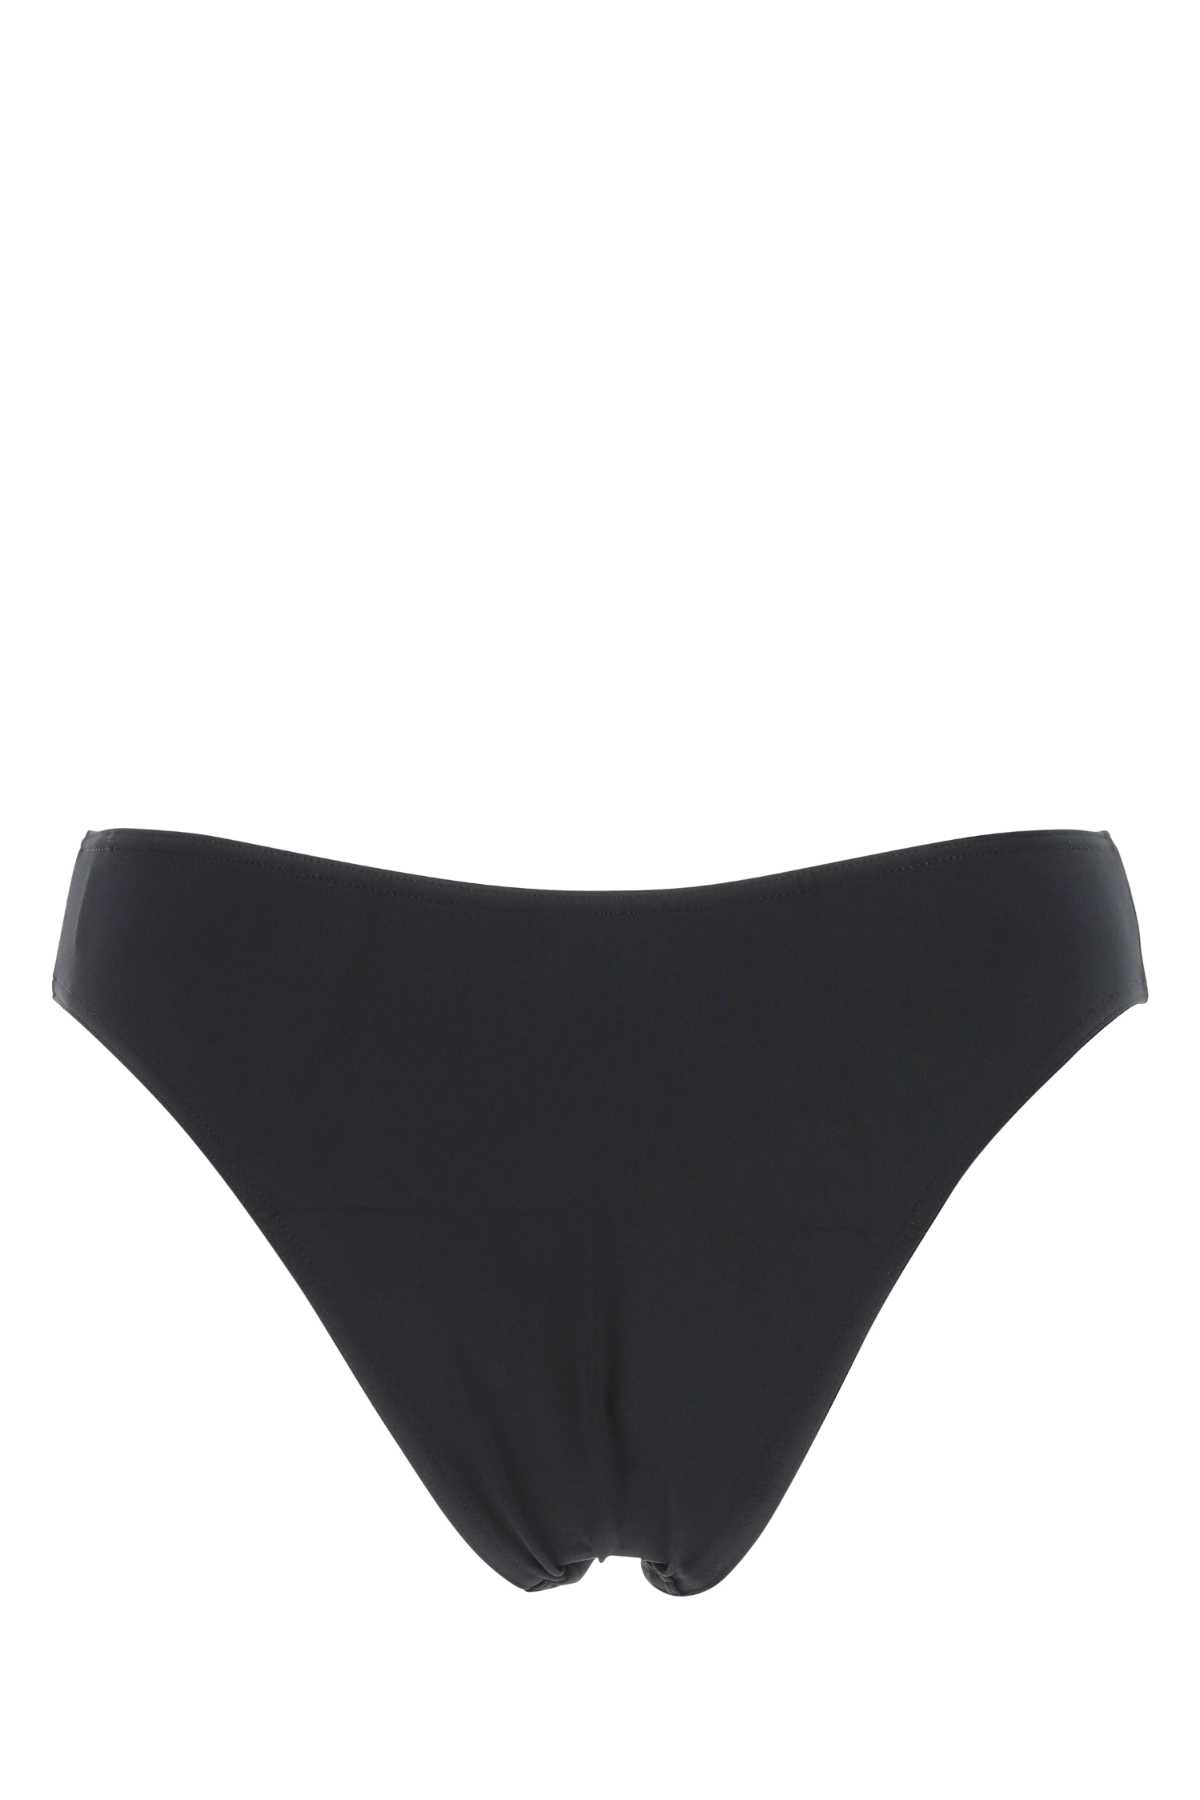 Eres Black Stretch Nylon Bikini Bottom In 018137